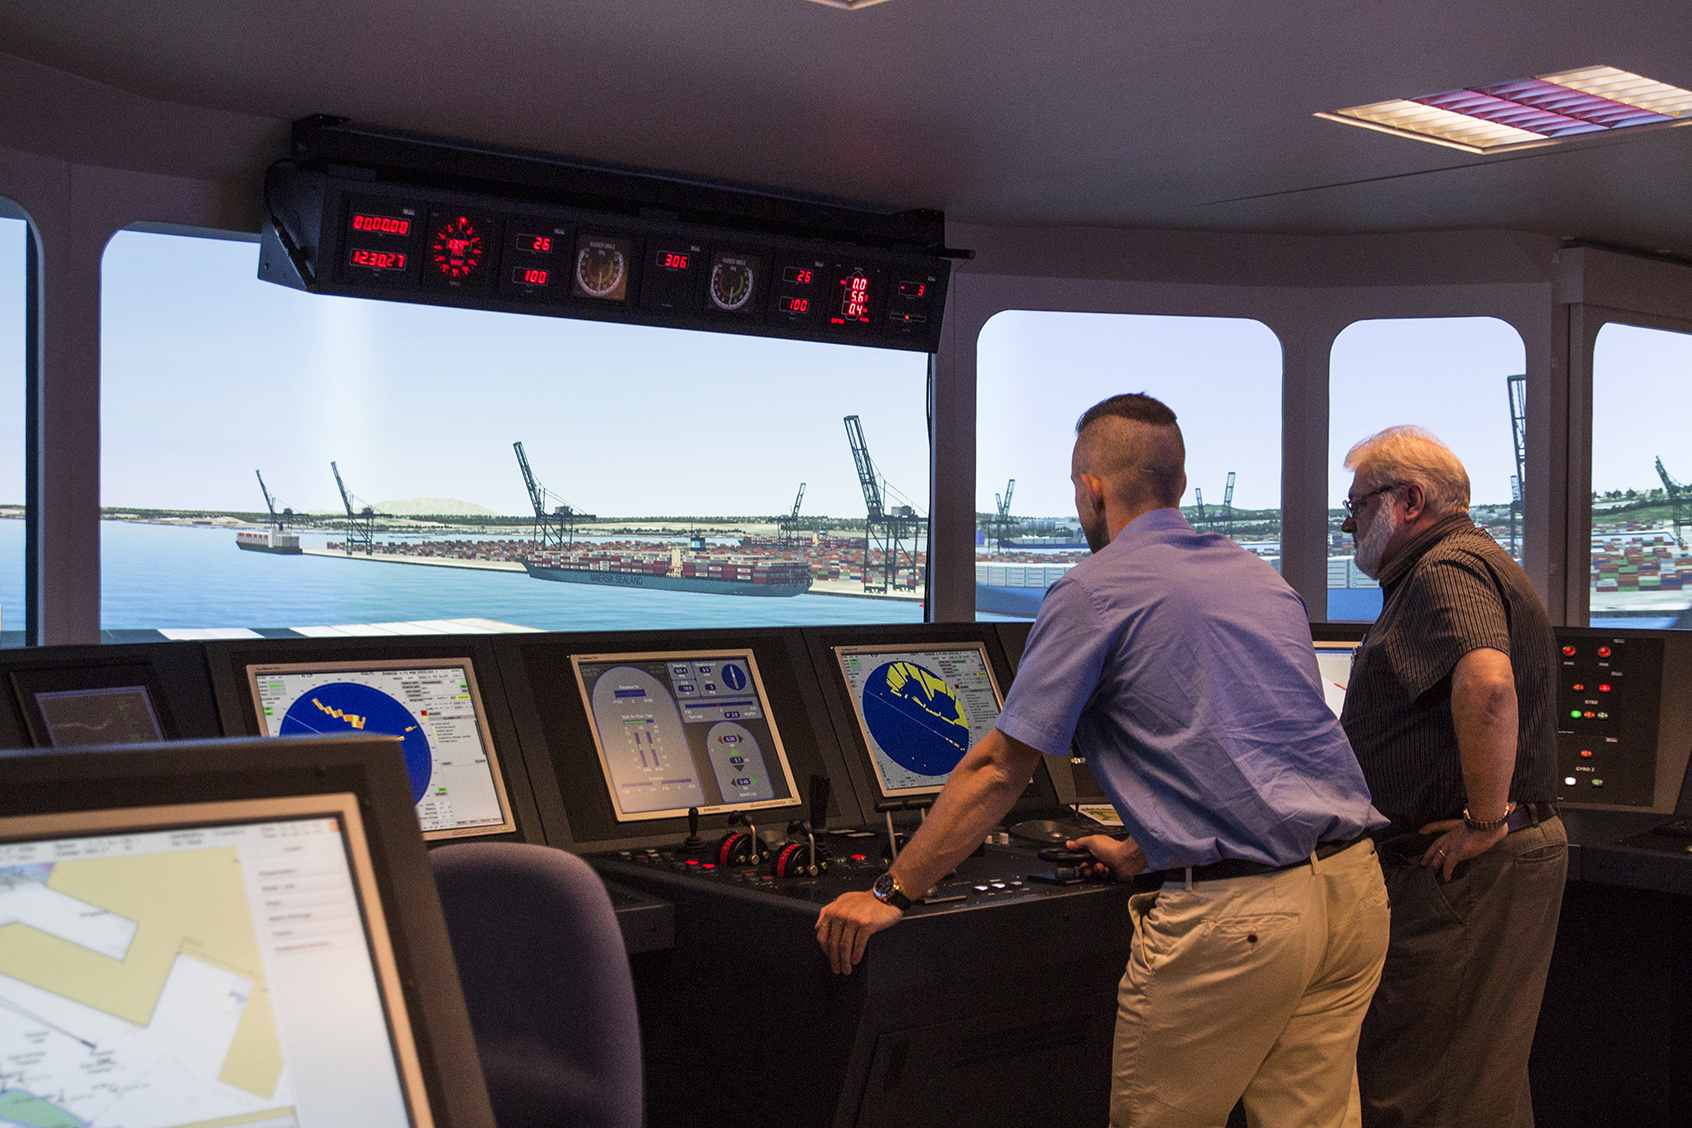 maritime simulator-based test centre